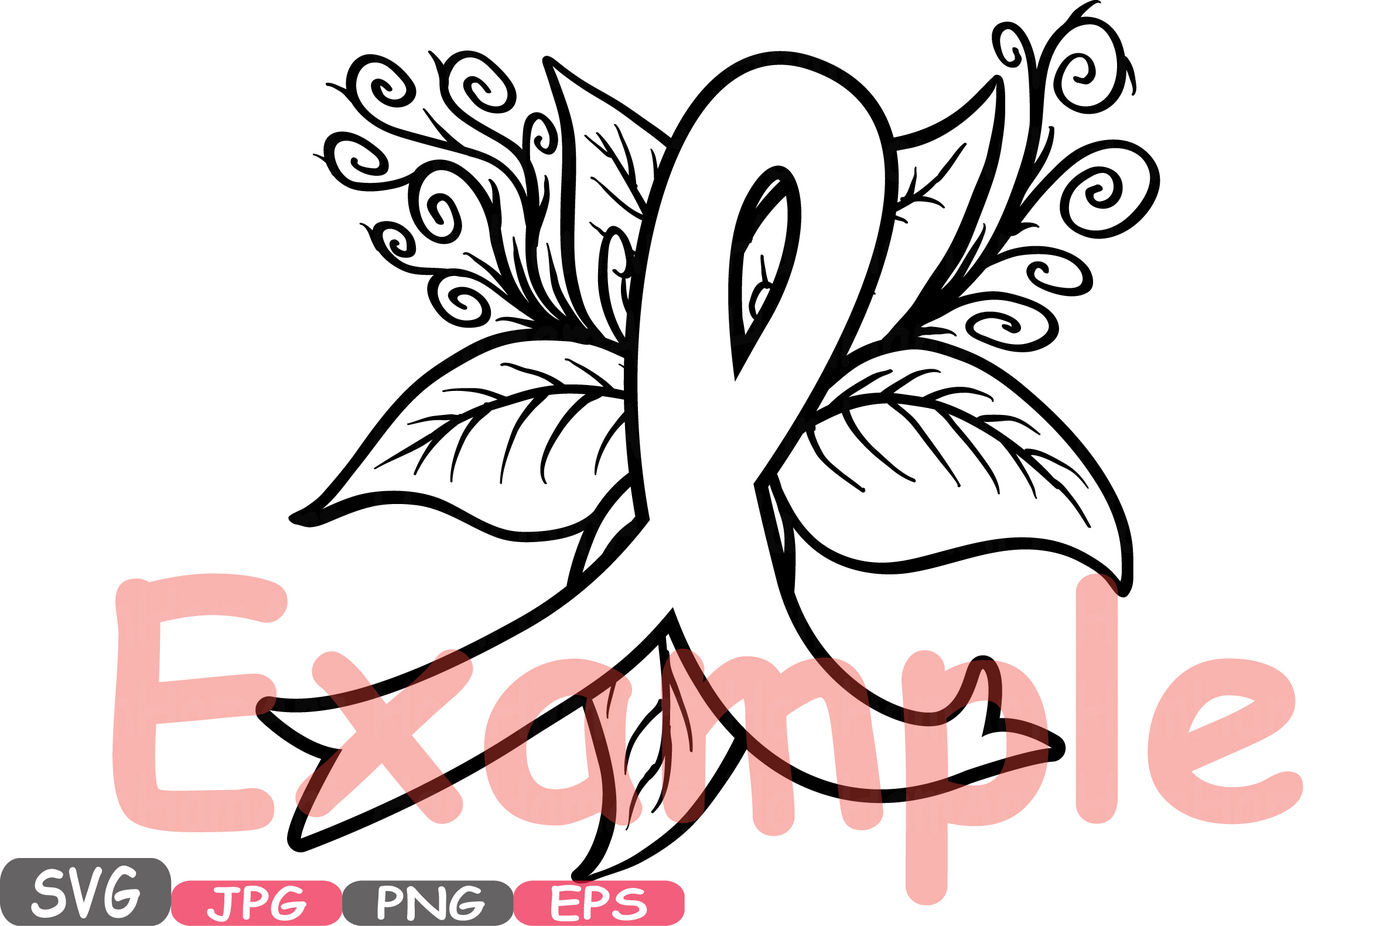 Download Breast Cancer Flower Svg Cricut Silhouette Swirl Props Cutting Files Awareness Cancer Survivor Clipart Digital Svg Eps Vinyl Sale 543s By Hamhamart Thehungryjpeg Com